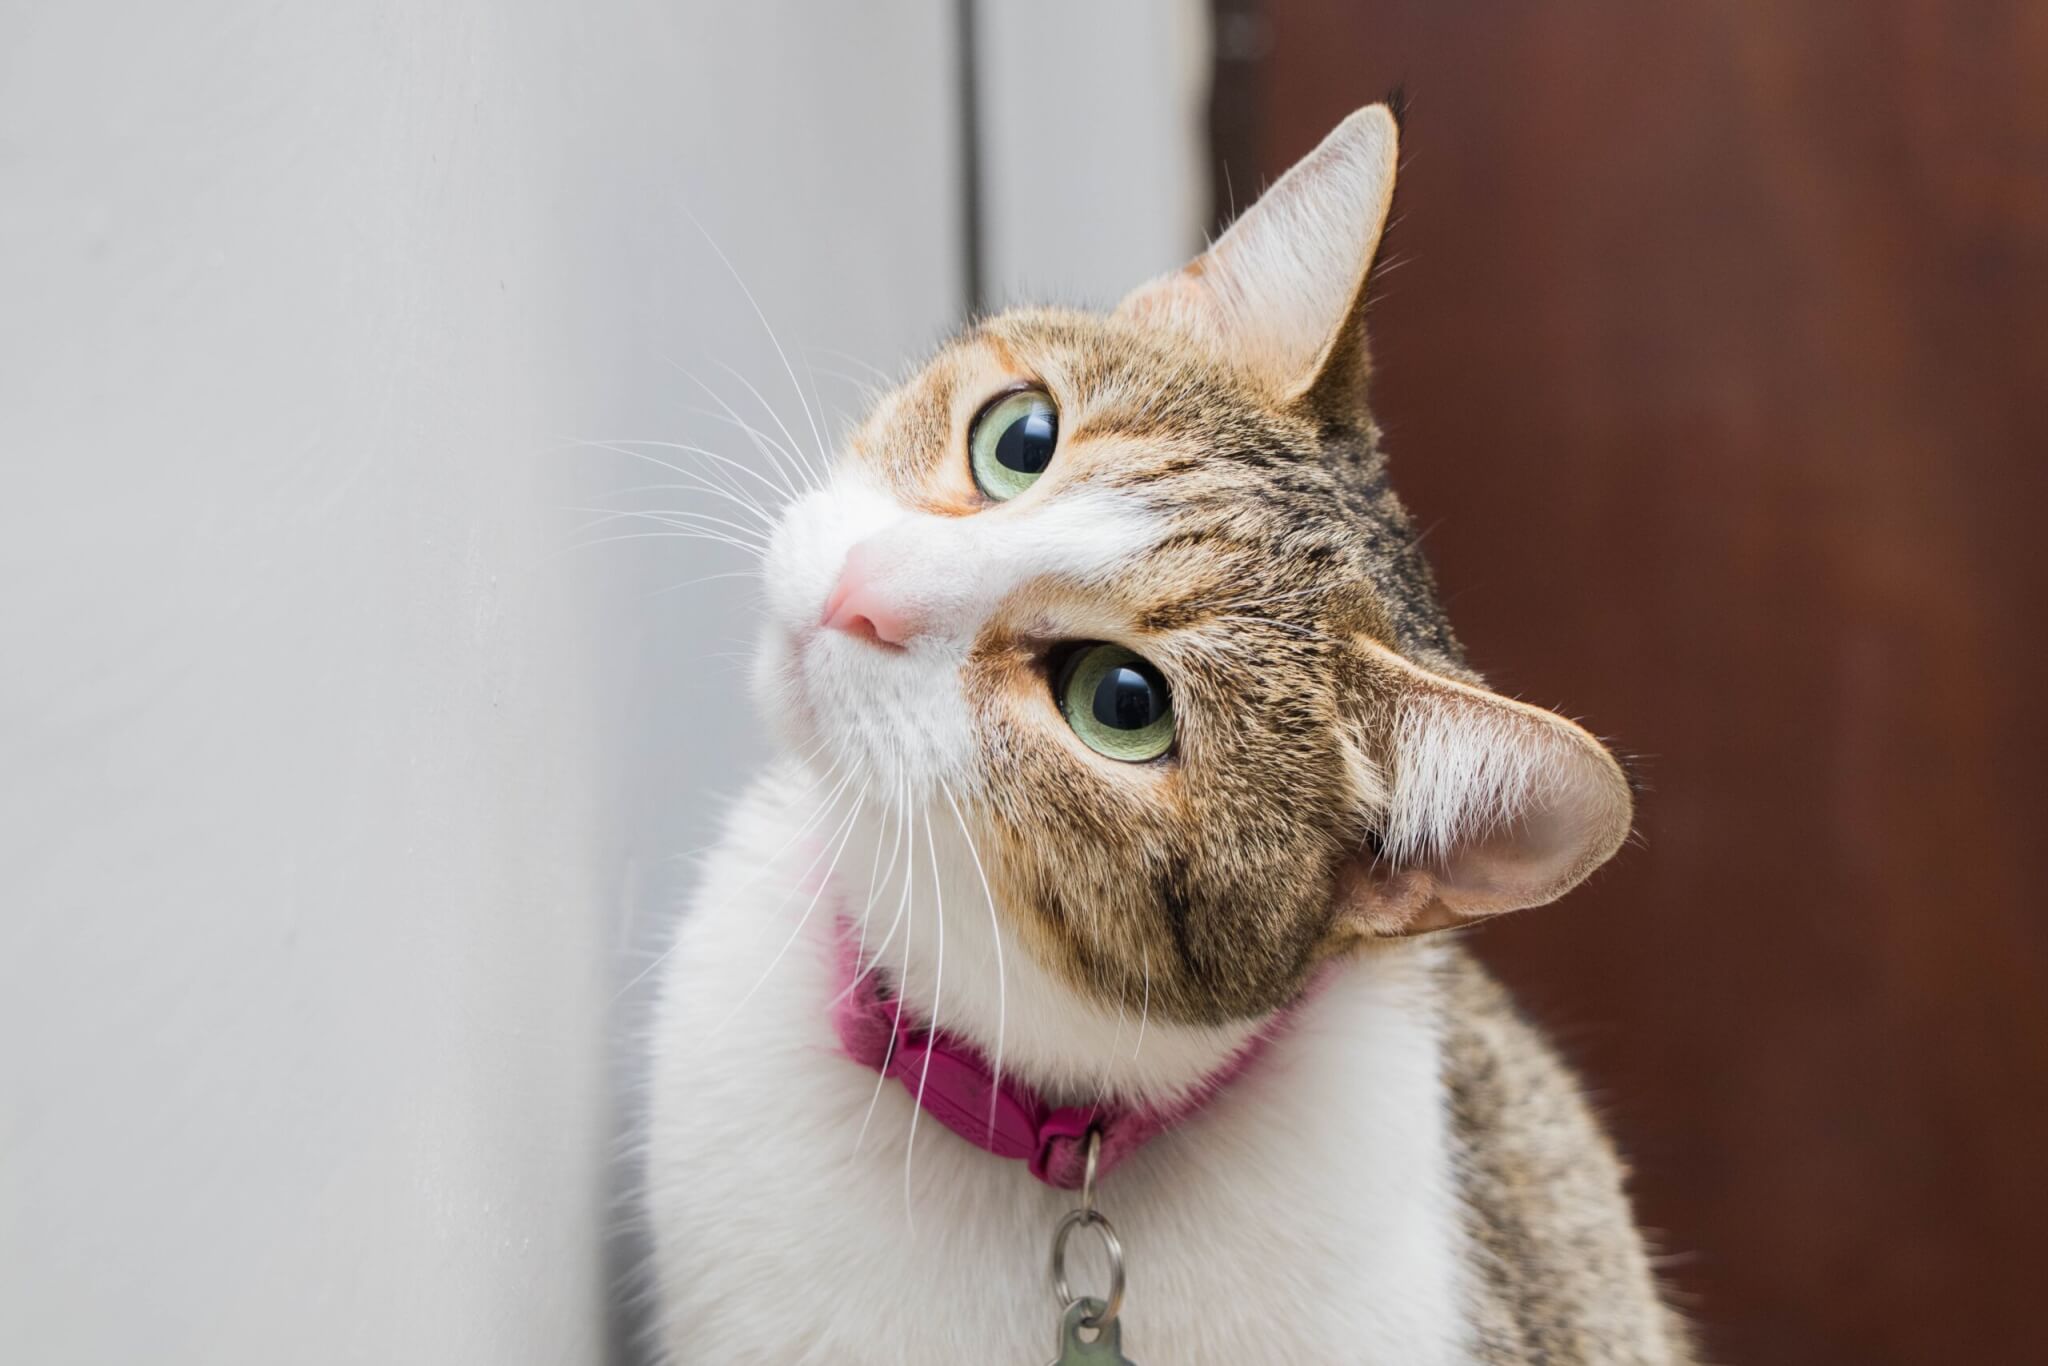 Cat wearing a collar